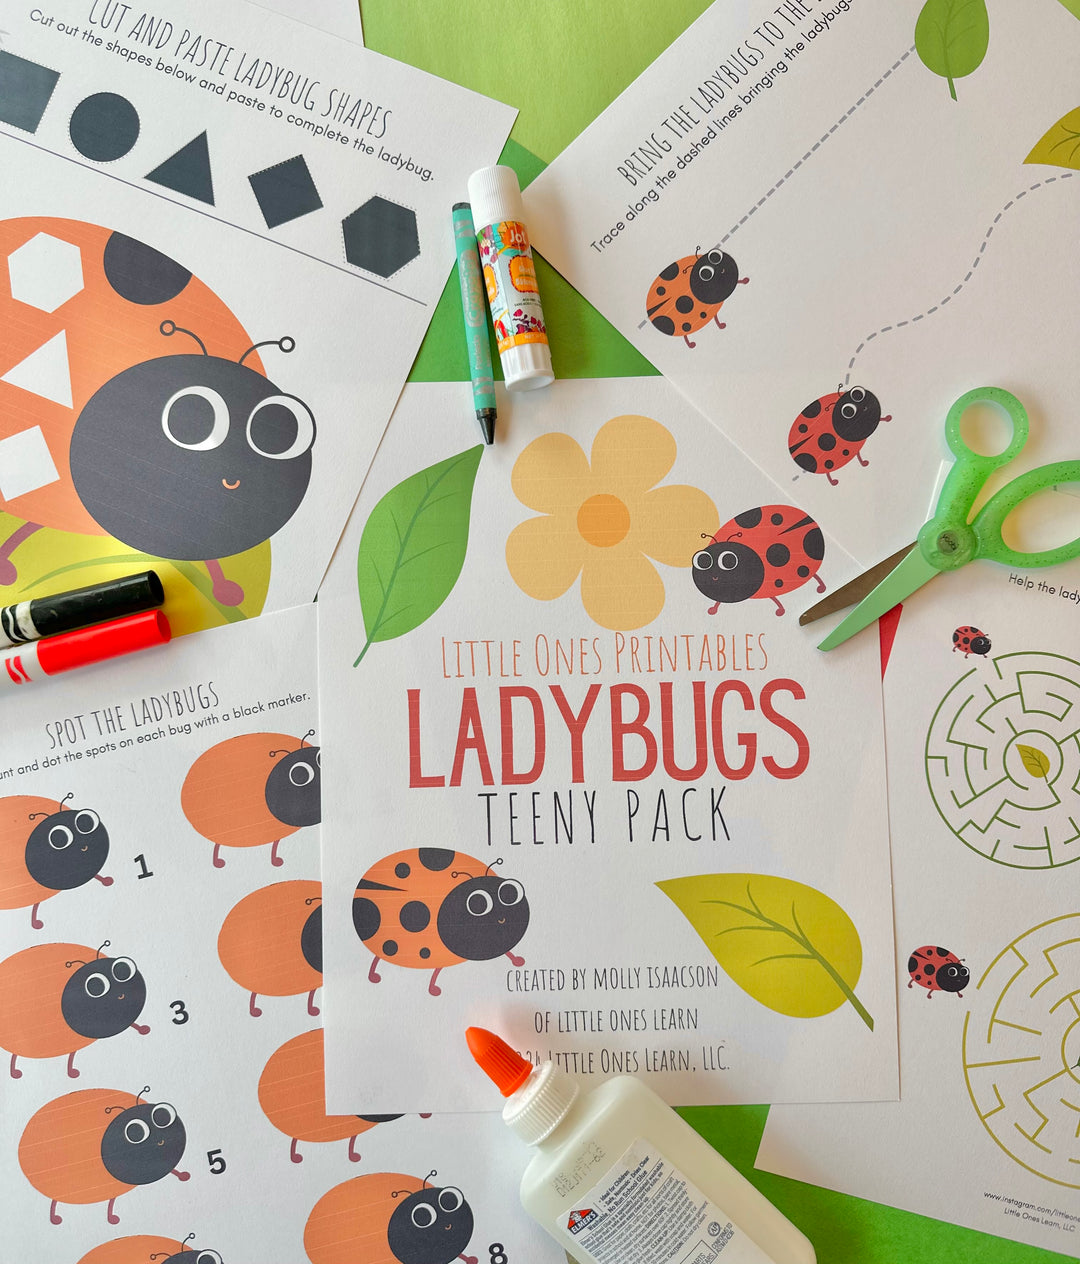 LOL Ladybugs Teeny Pack